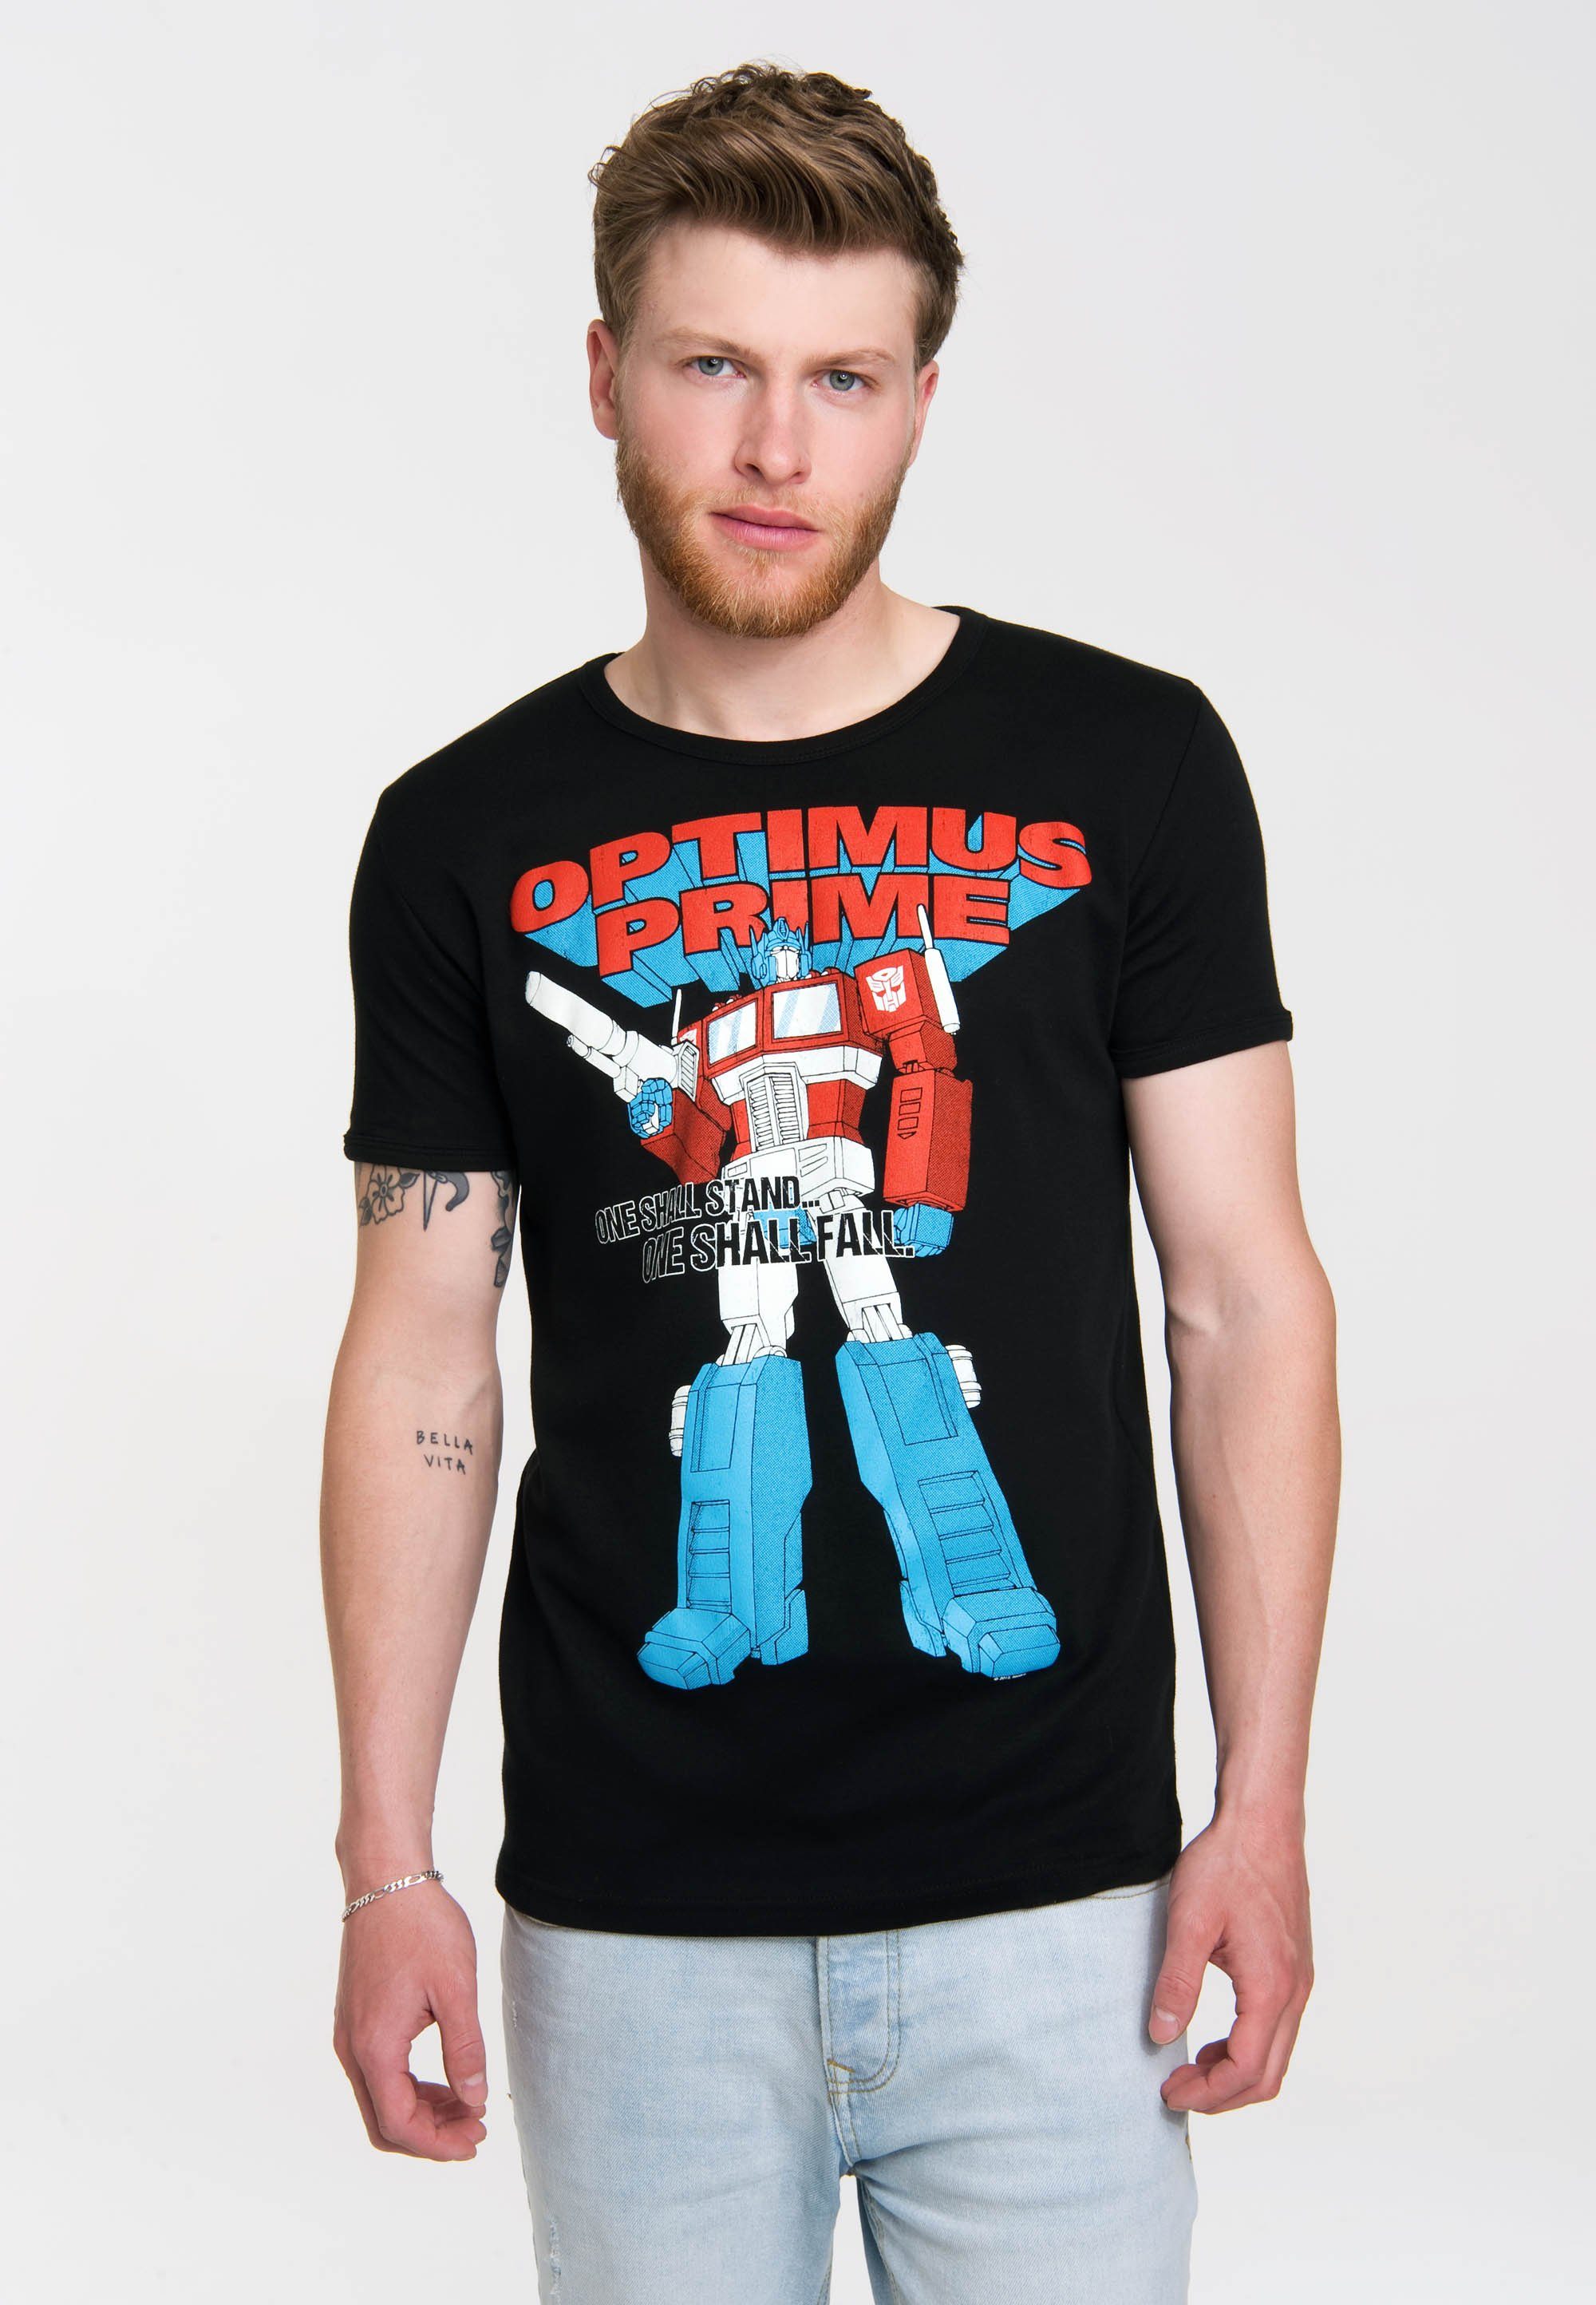 LOGOSHIRT T-Shirt Transformers - Oprimus Prime - One Shall Stand mit Optimus Prime-Print